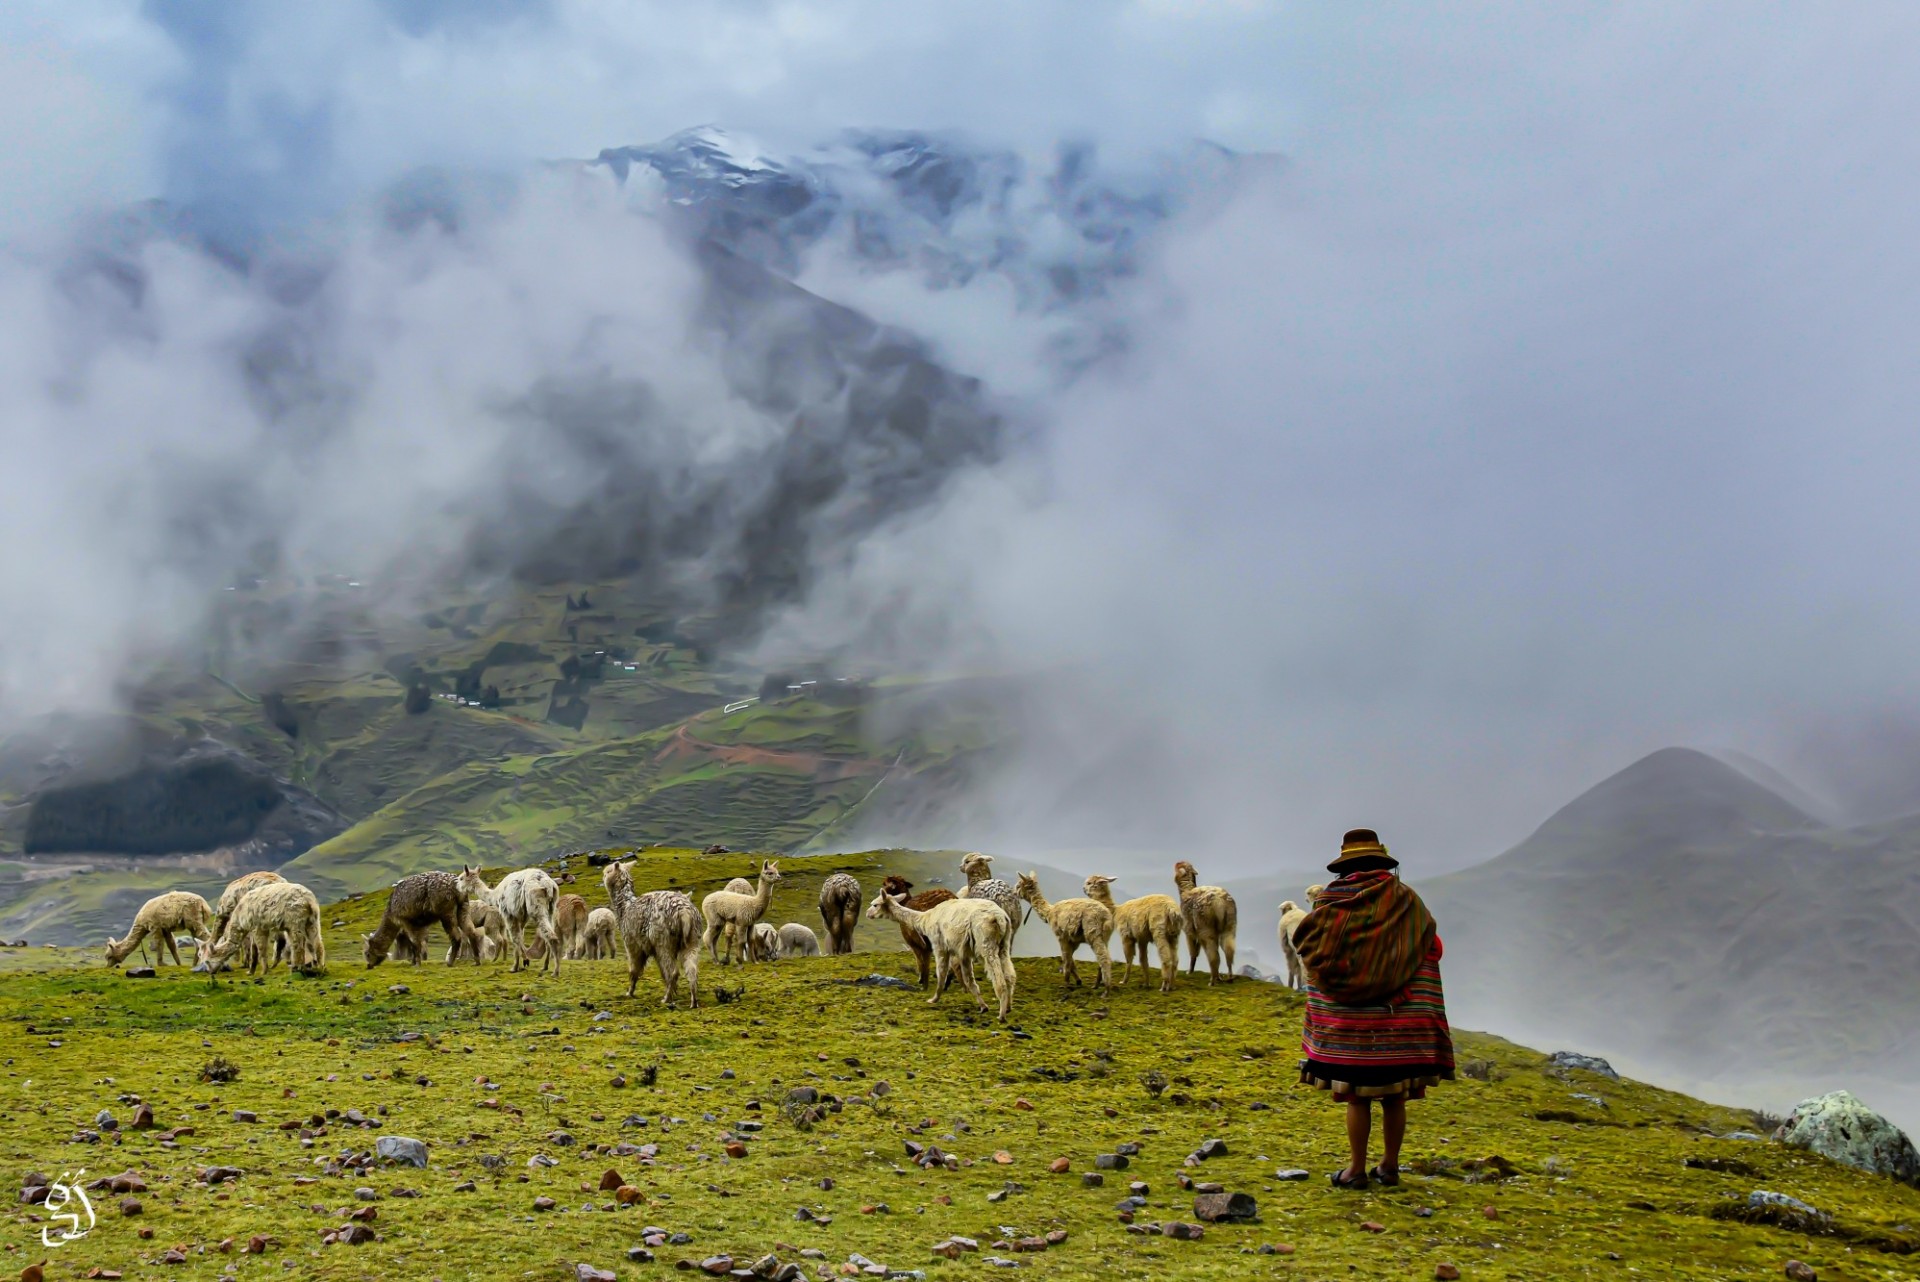 Shepherdess in the Highlands of Peru by Gautam Jain